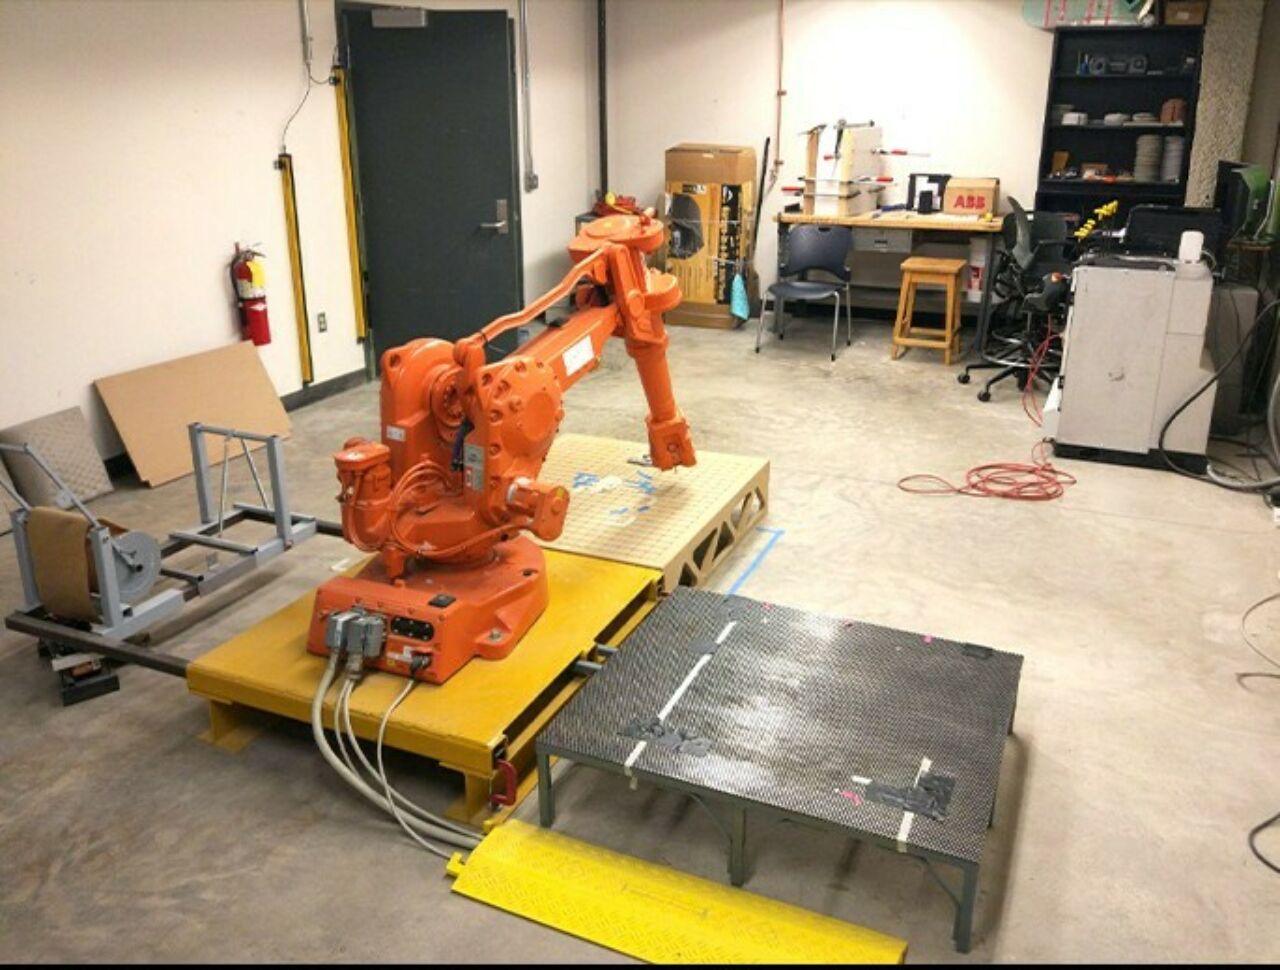 large orange robot with arm on platform in workspace